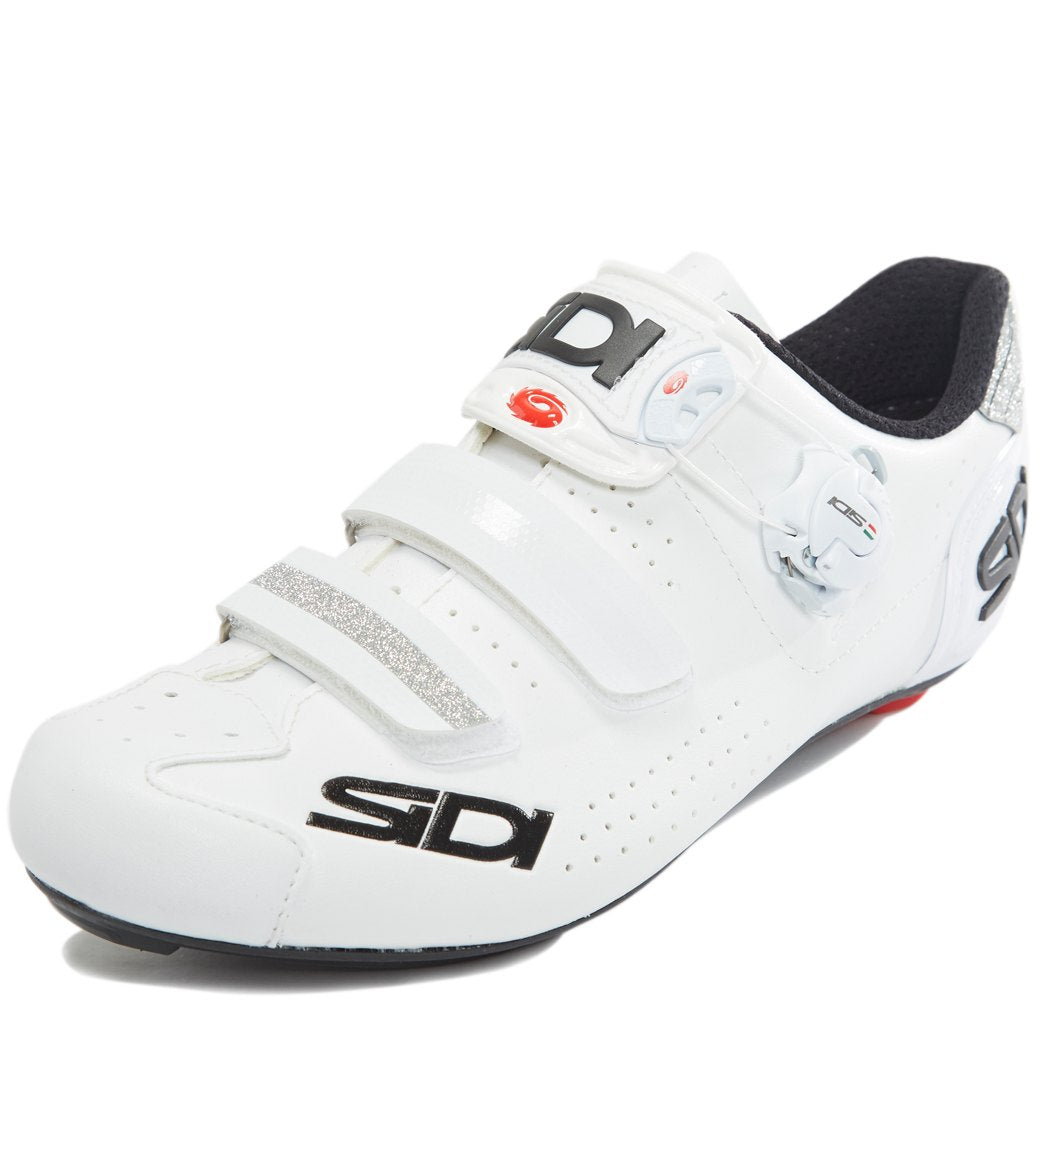 SIDI Women's Alba 2 Tri Cycling Shoes at SwimOutlet.com